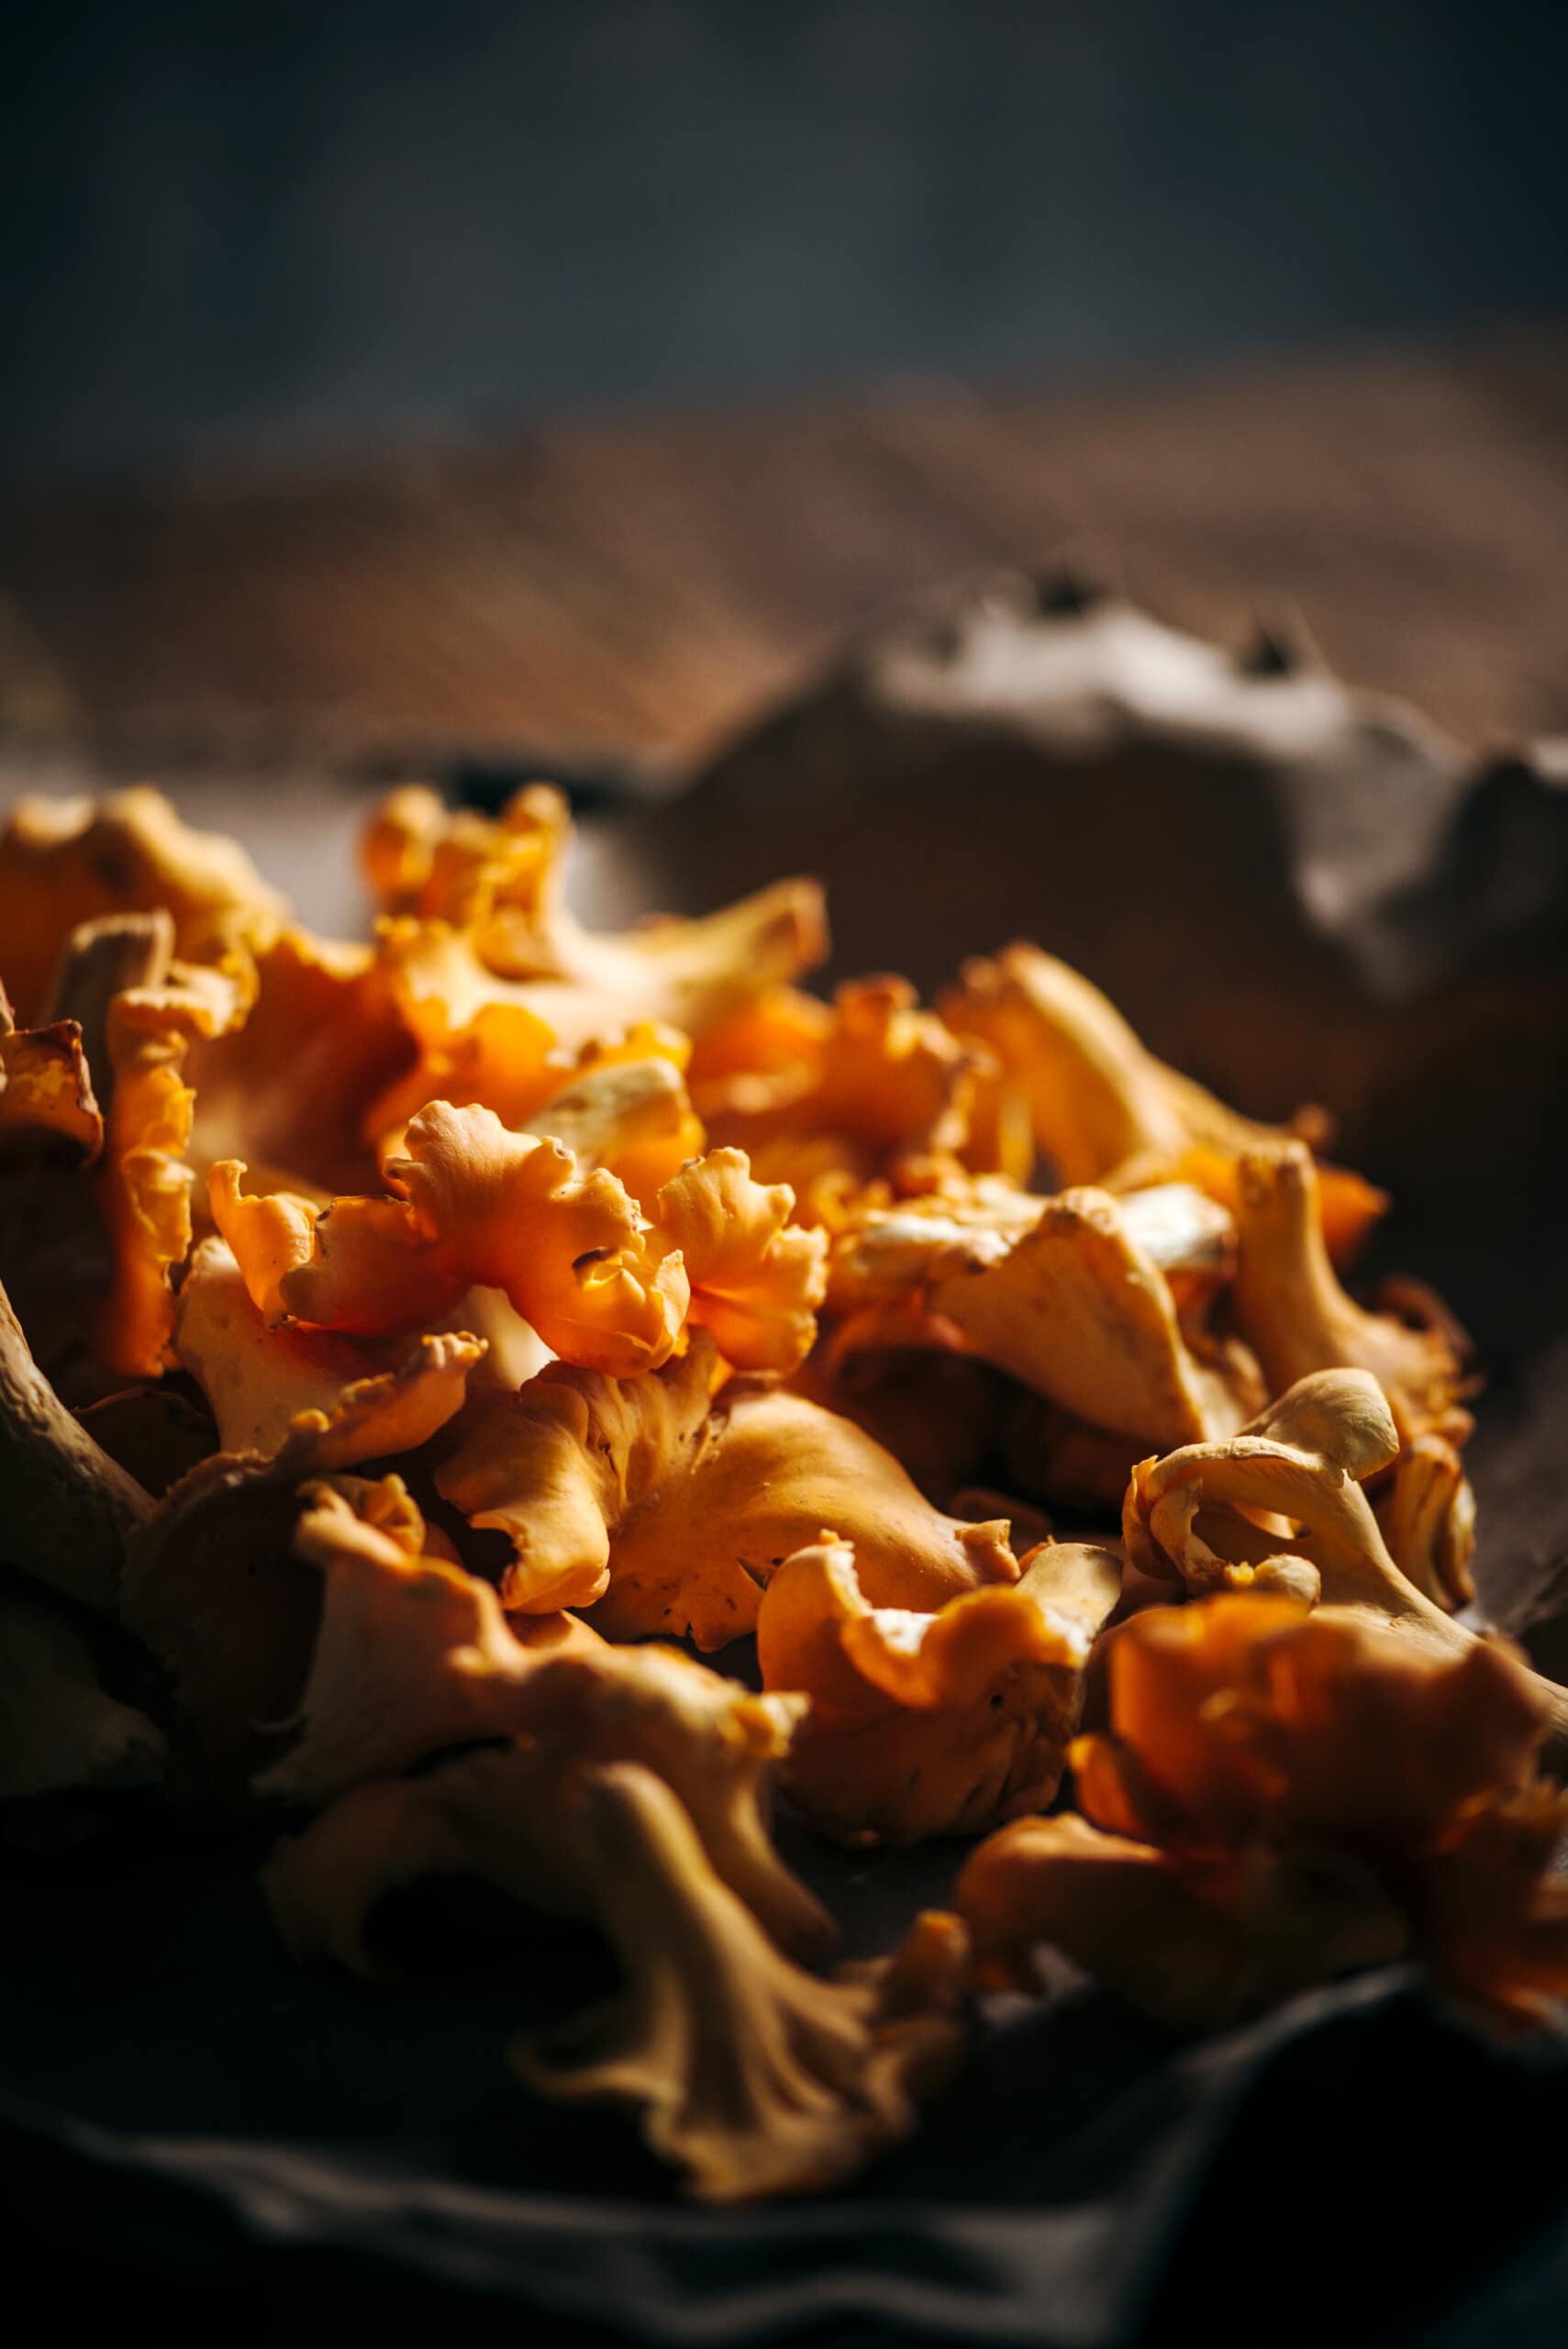 Wild food - Chanterelles Mushrooms